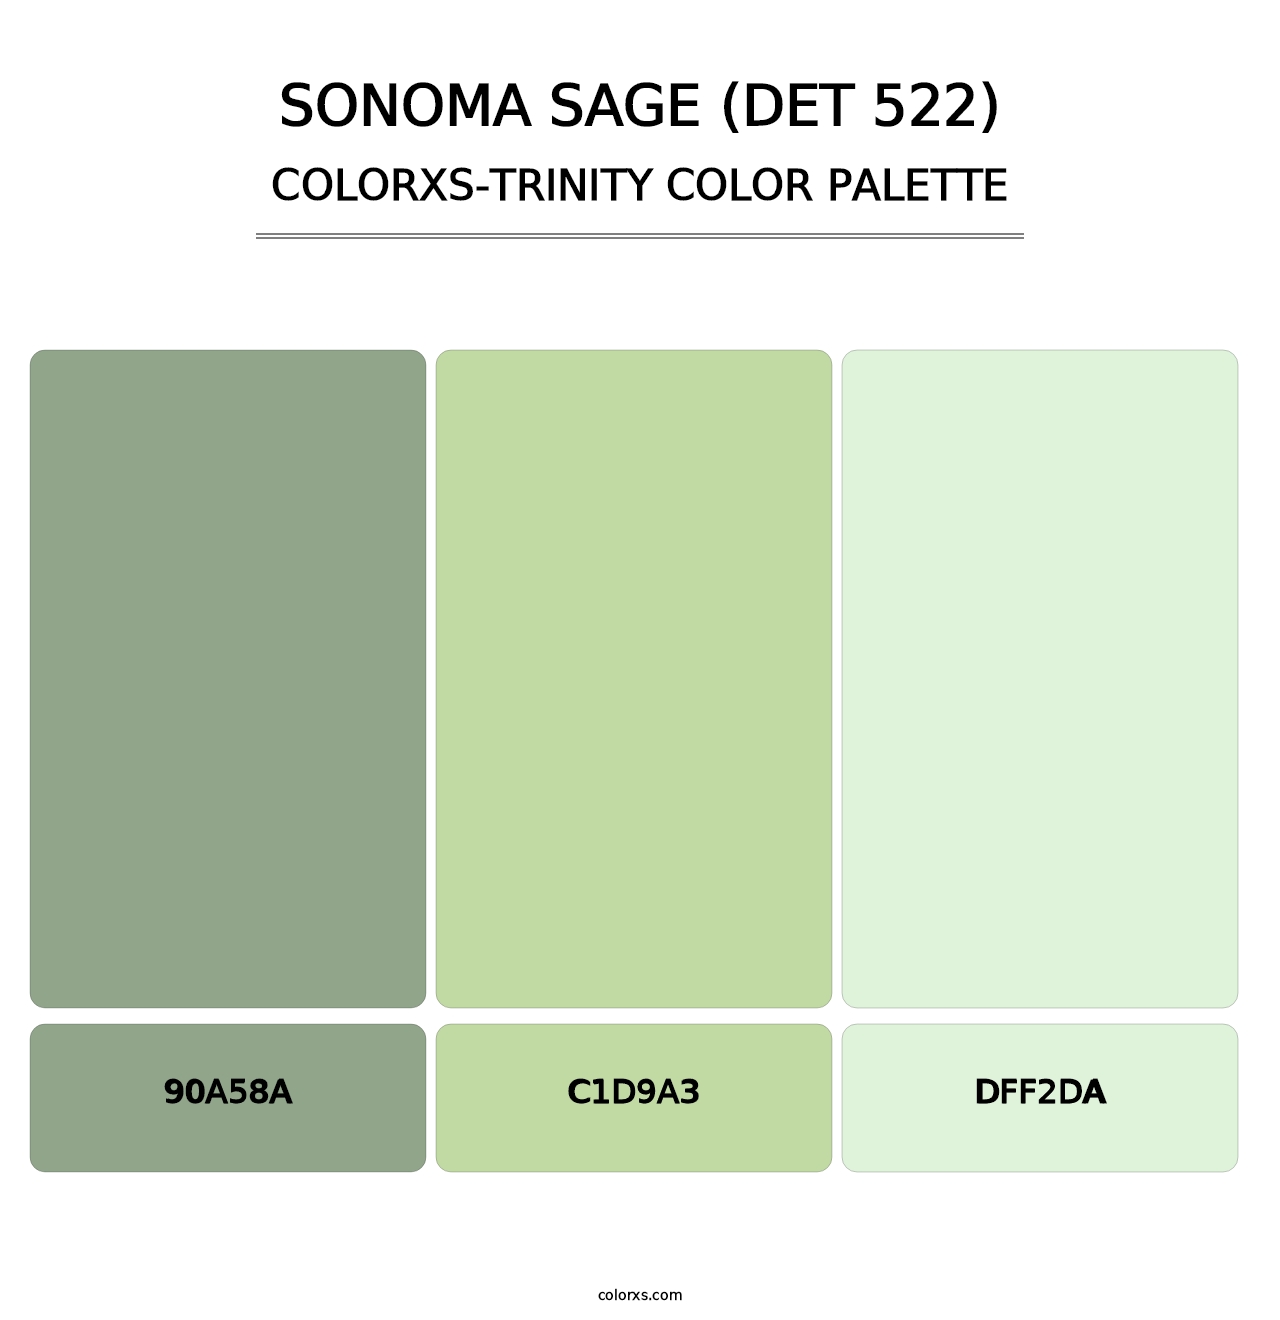 Sonoma Sage (DET 522) - Colorxs Trinity Palette